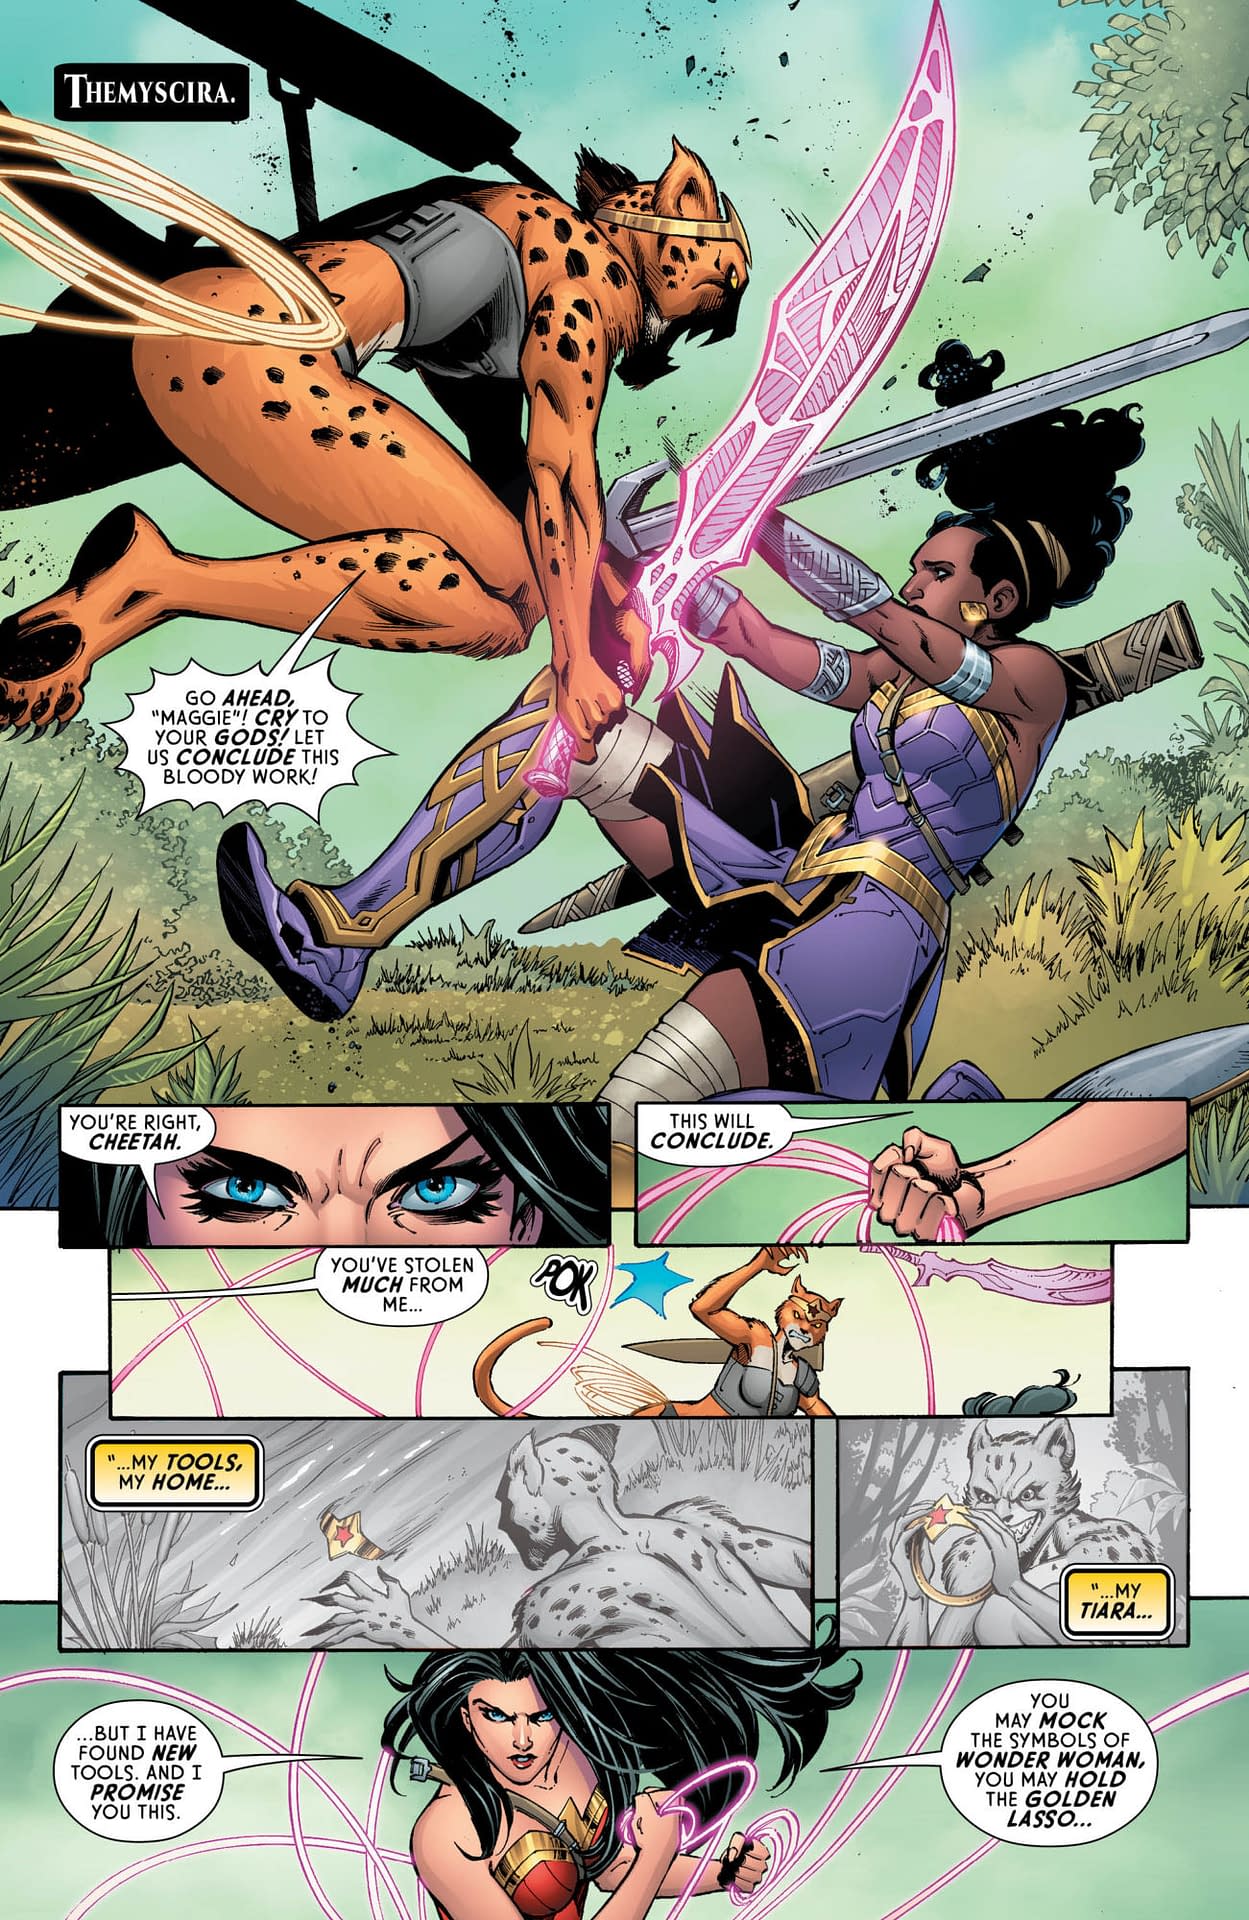 Wonder Woman Has No Gratitude for Cheetah in Wonder Woman #83 [Preview]